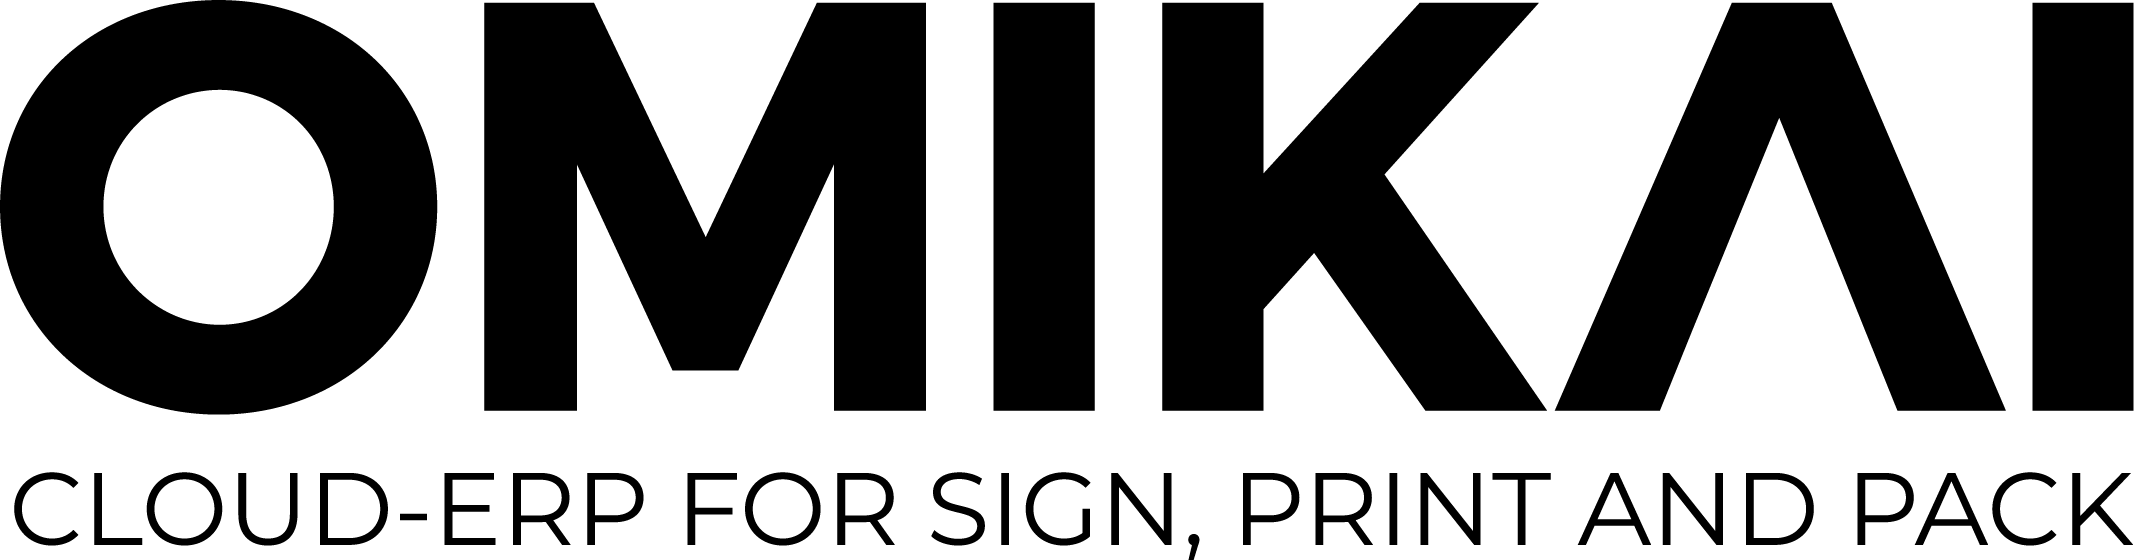 Omikai Logo – Byline